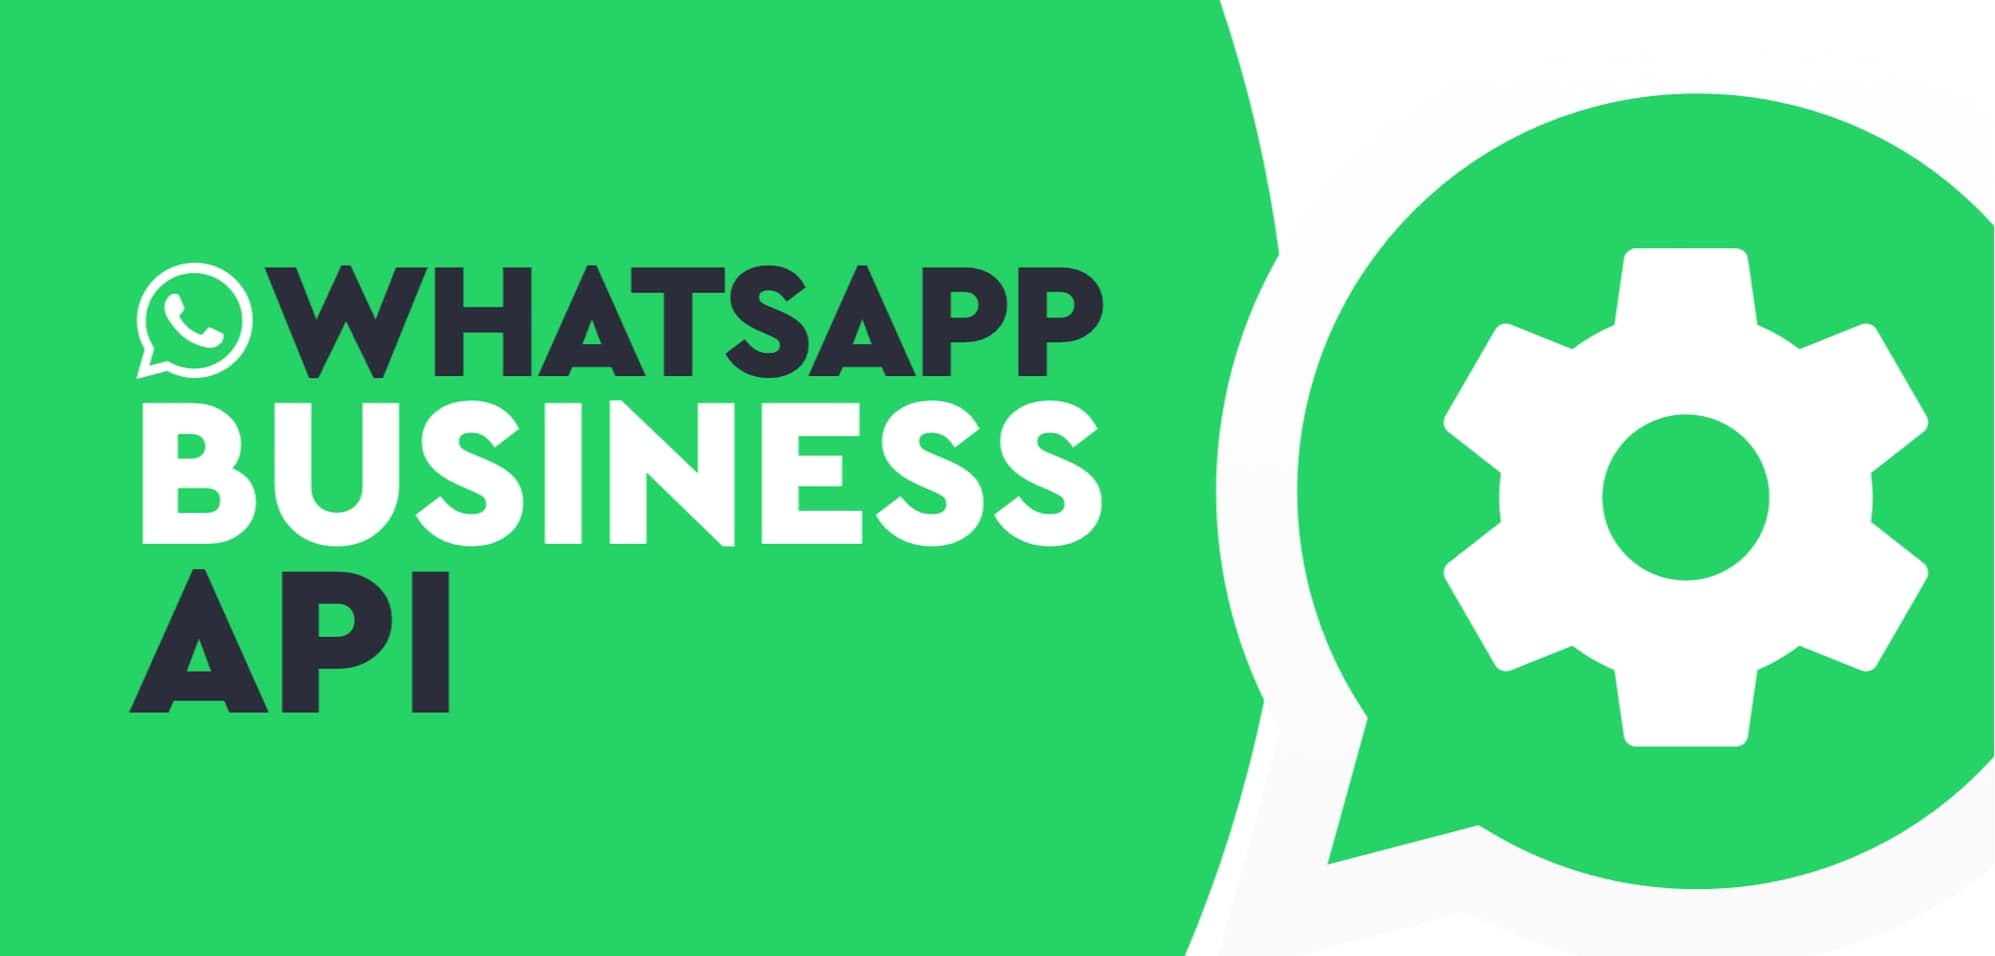 WhatsApp Business APIwhat